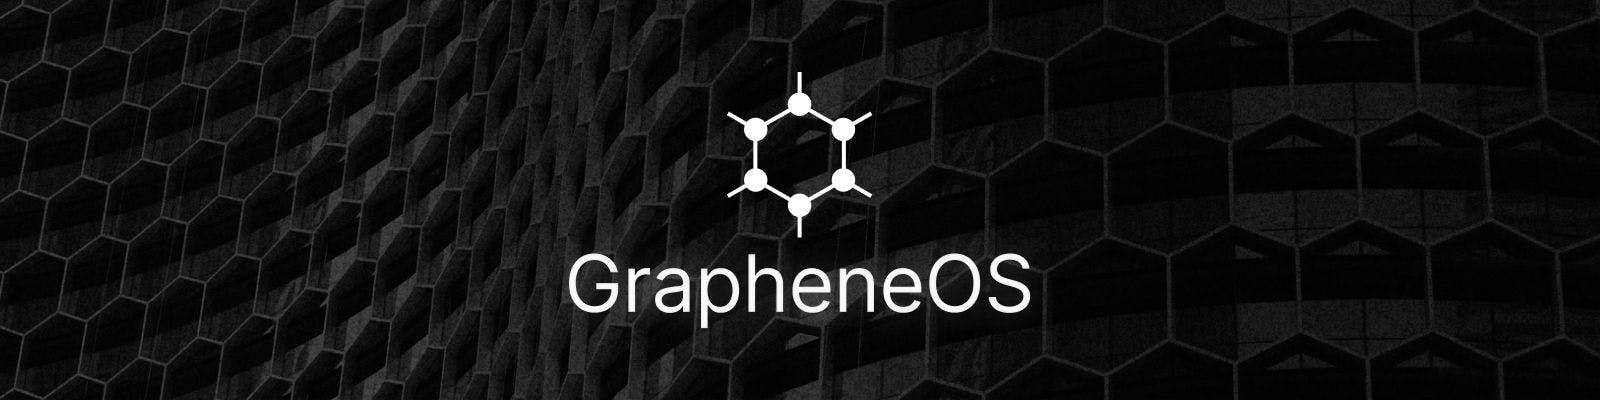 GrapheneOS Logo